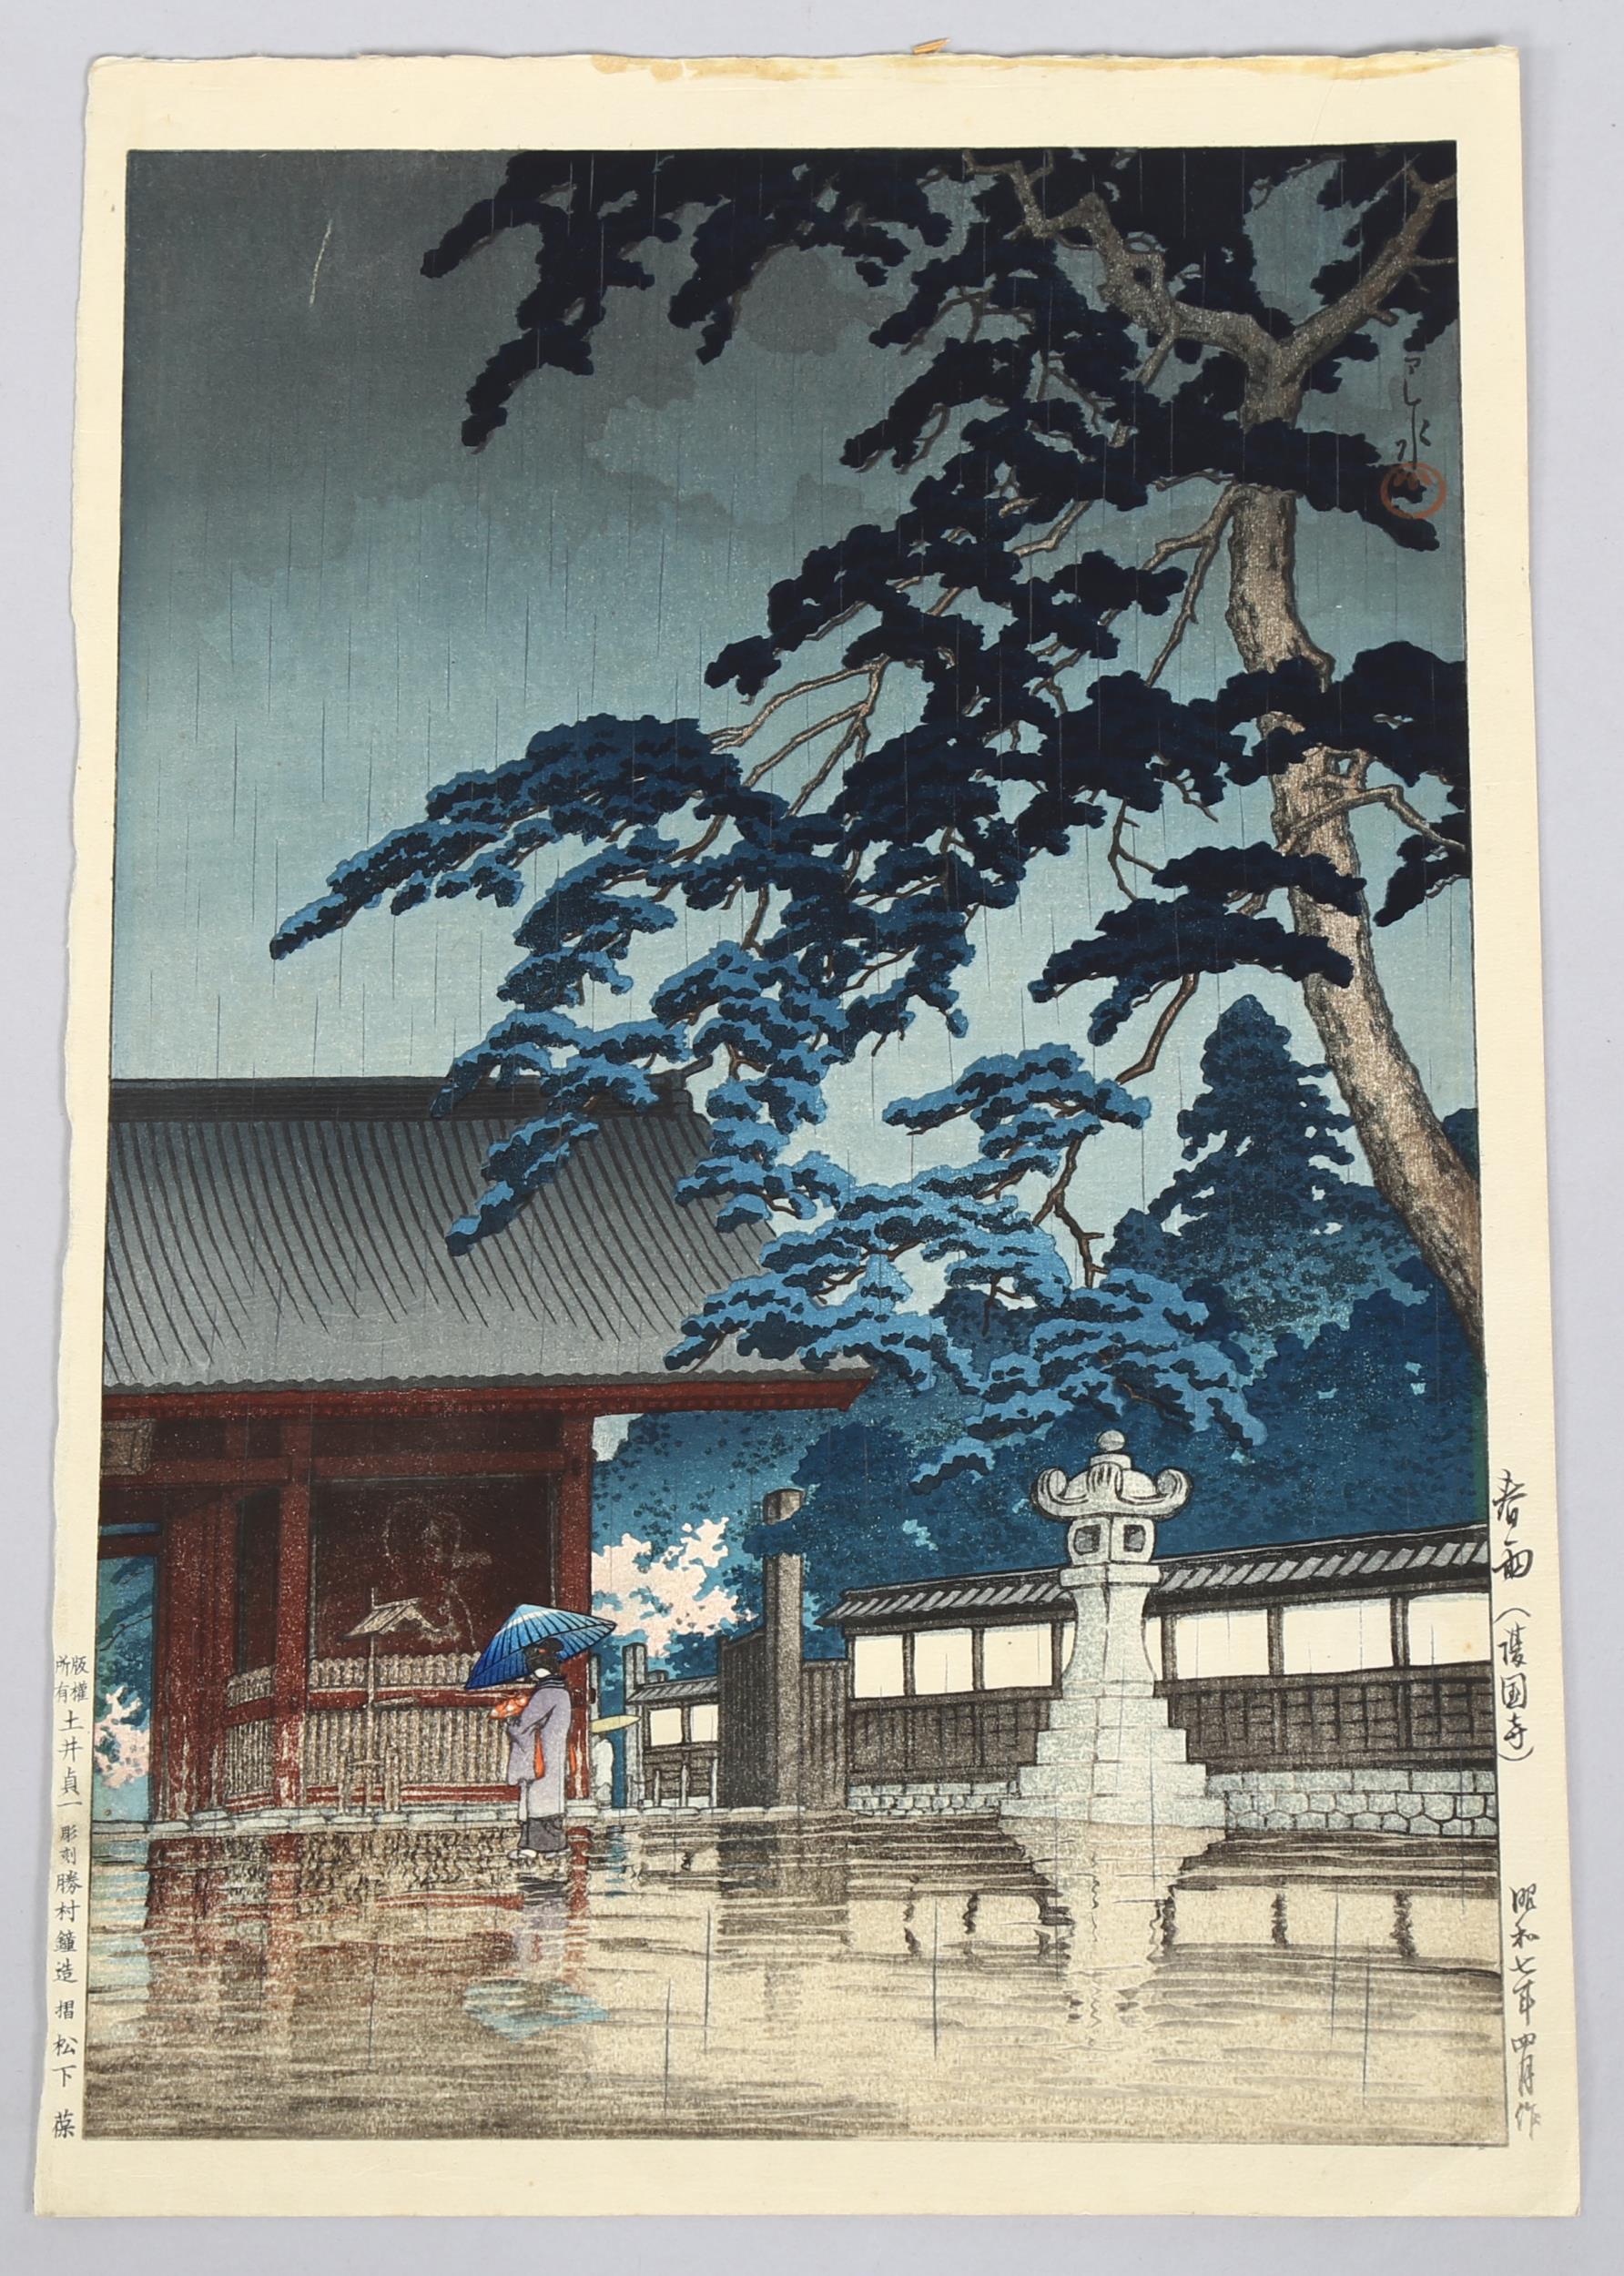 Kawase Hasui (1883 - 1957), spring rain Gokoku temple, woodblock print, published 1932, image 36cm x